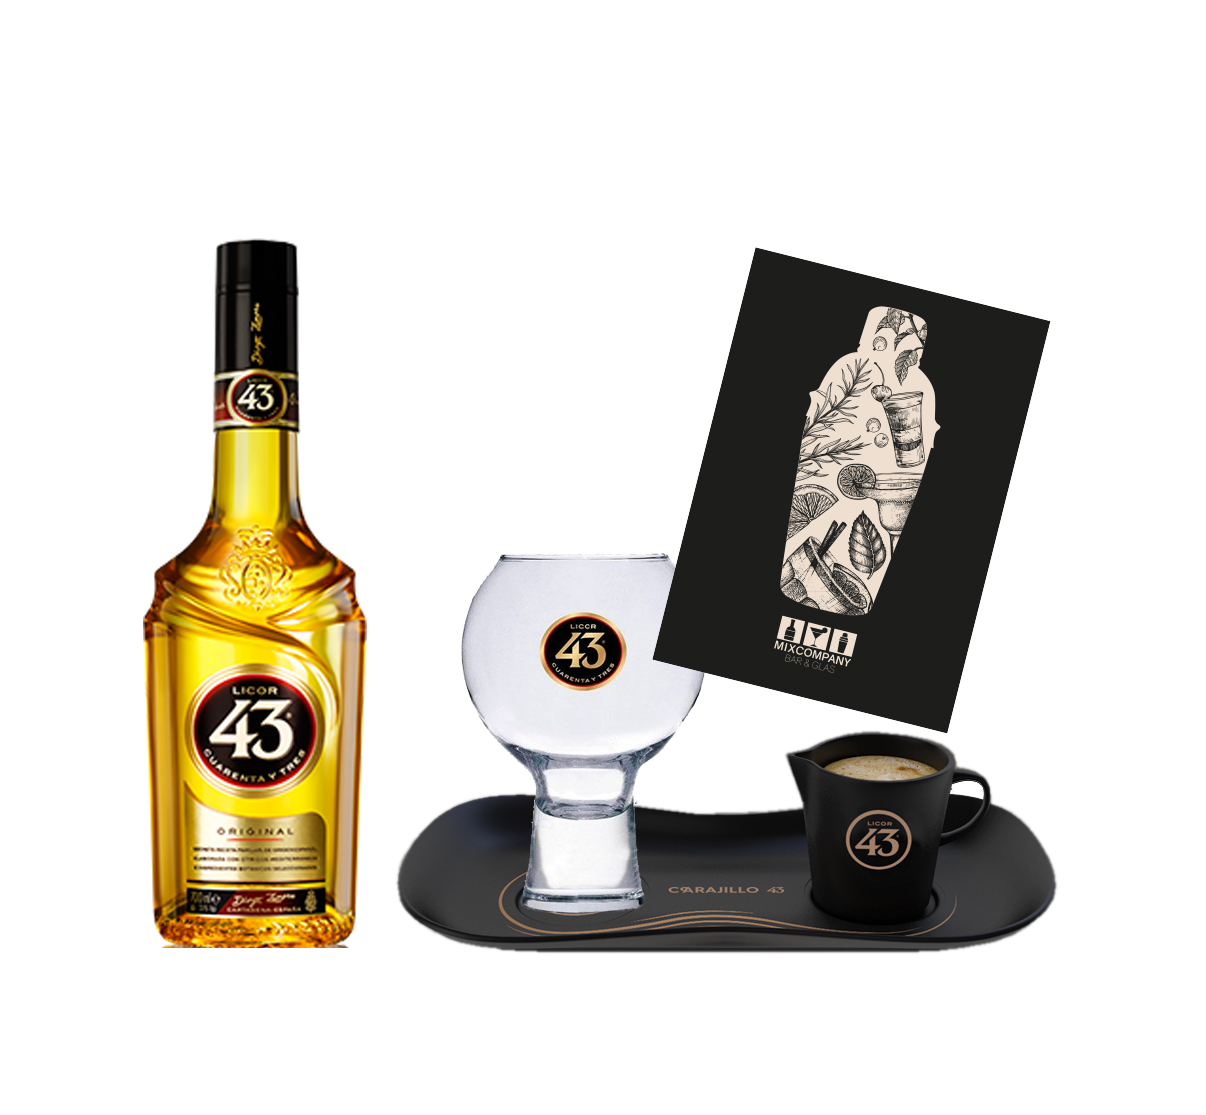 Licor 43 CARAJILLO Drink Licor 43 Original 0,7L (31% Vol) mit Espresso Service Set und Glas- Likör Liquor 43er logo Gold [Enthält Sulfite] Tablett